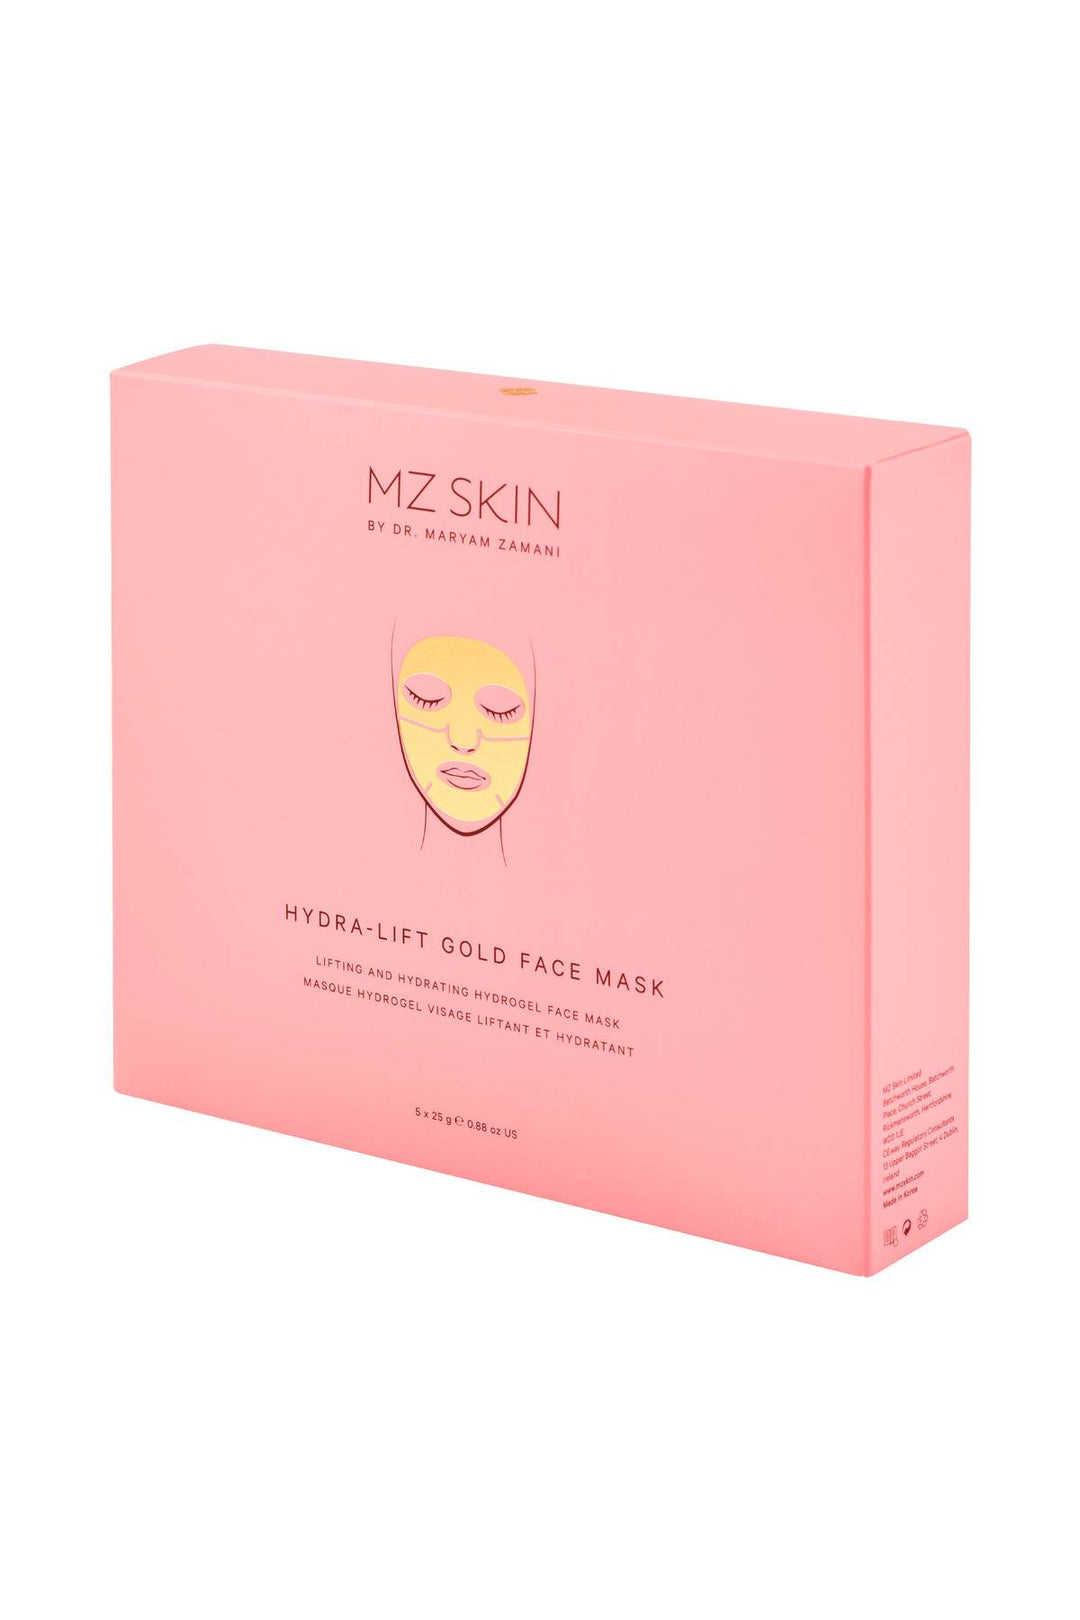 Mz skin hydra-lift gold face mask-0